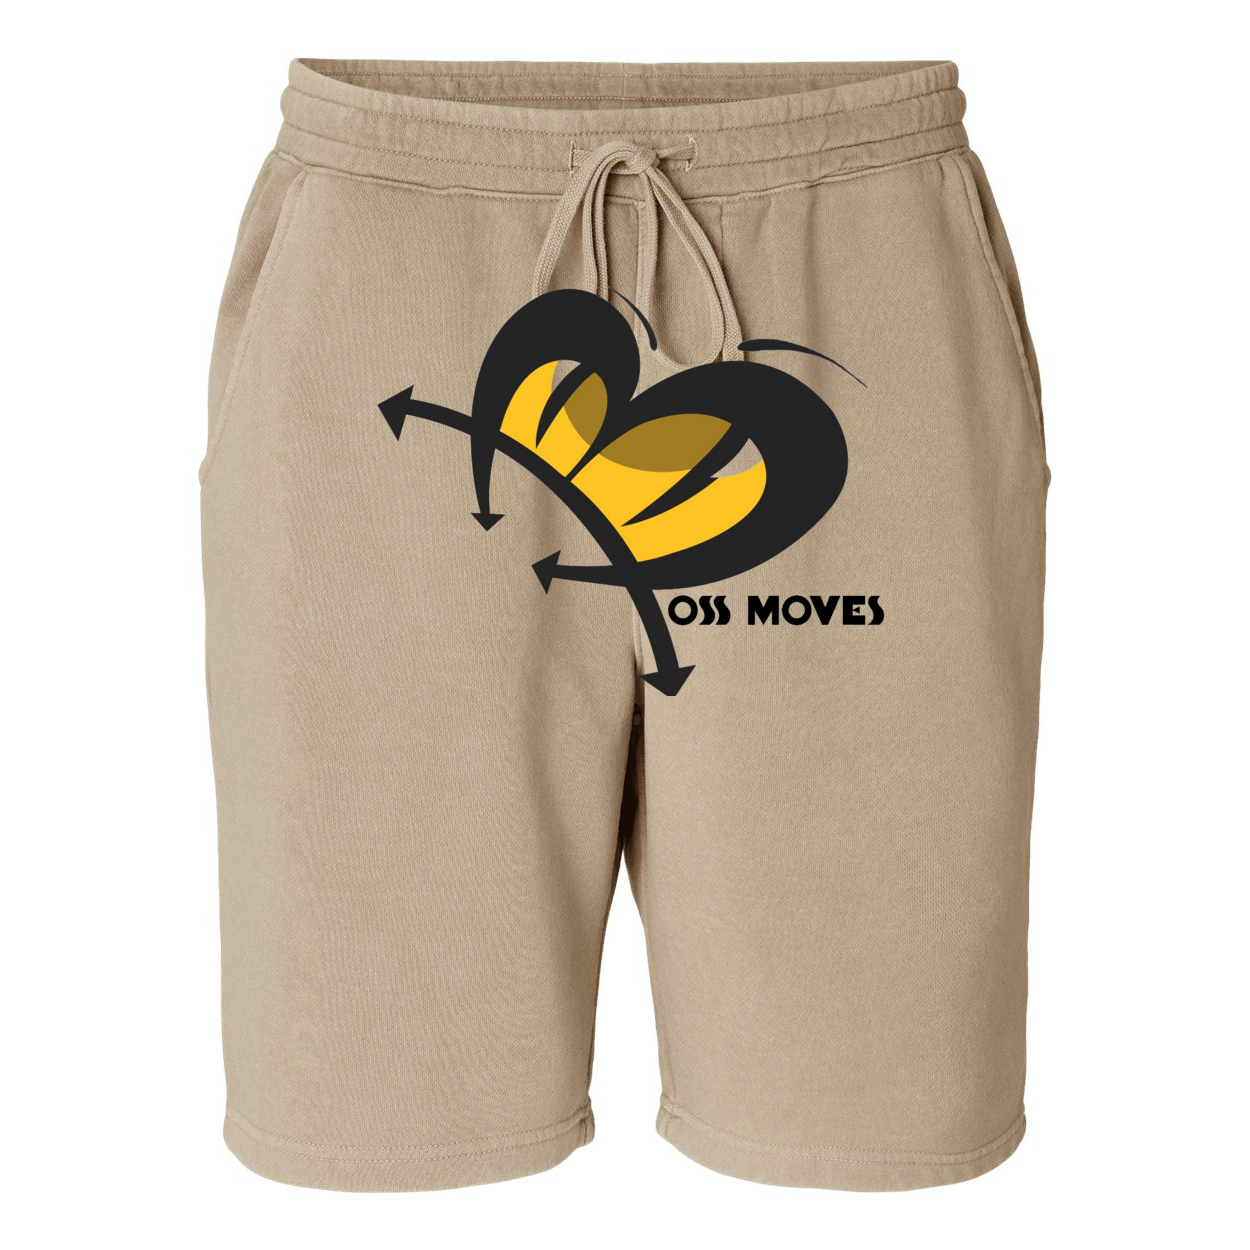 Bossmoves Fleece Shorts